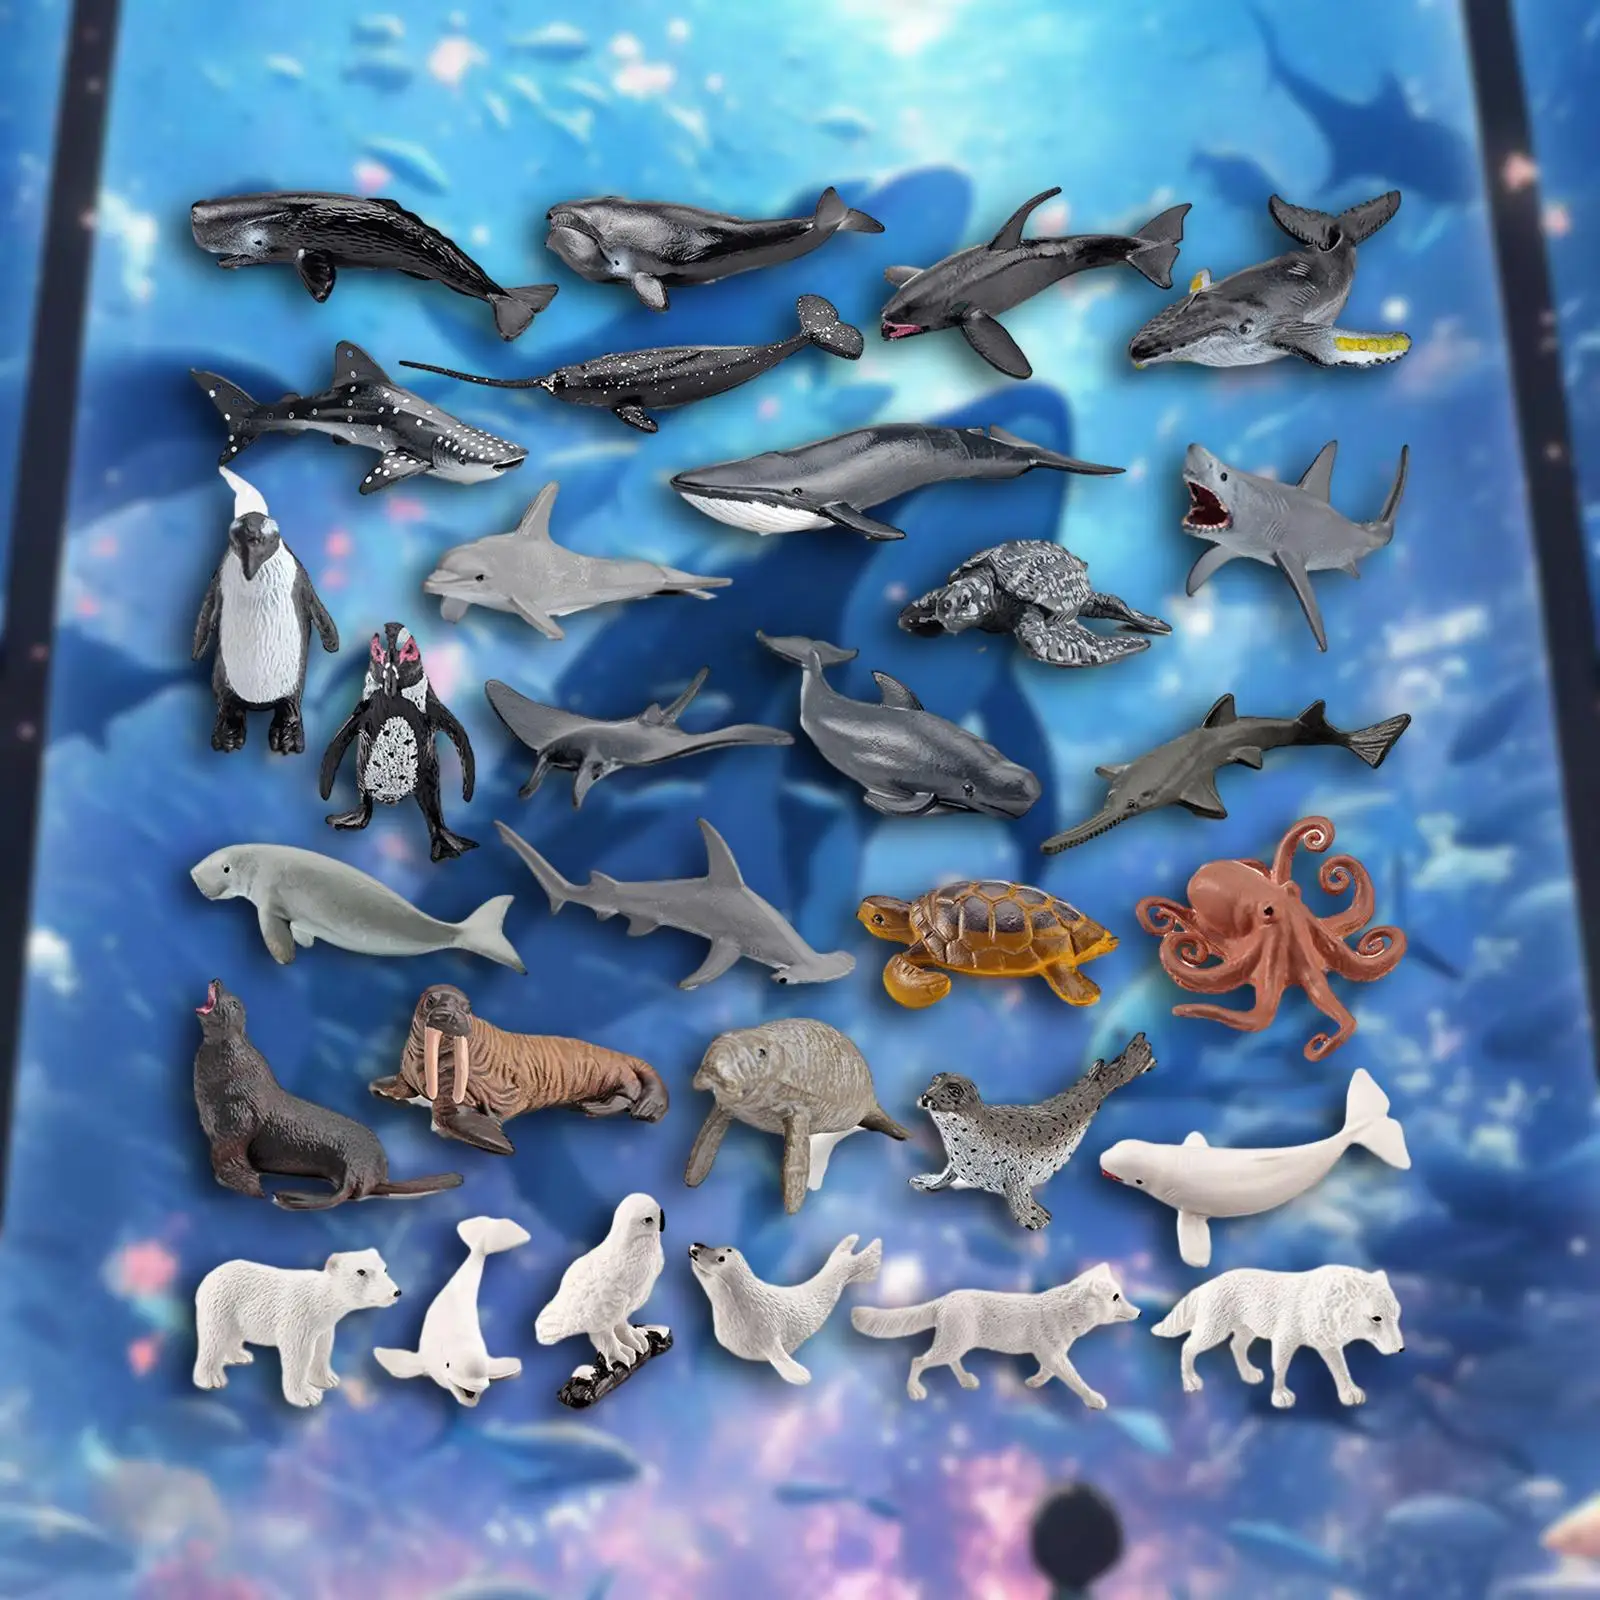 30 Pieces Sea Animals Marine Animal Toys for Kids Gift Home Desktop Decor